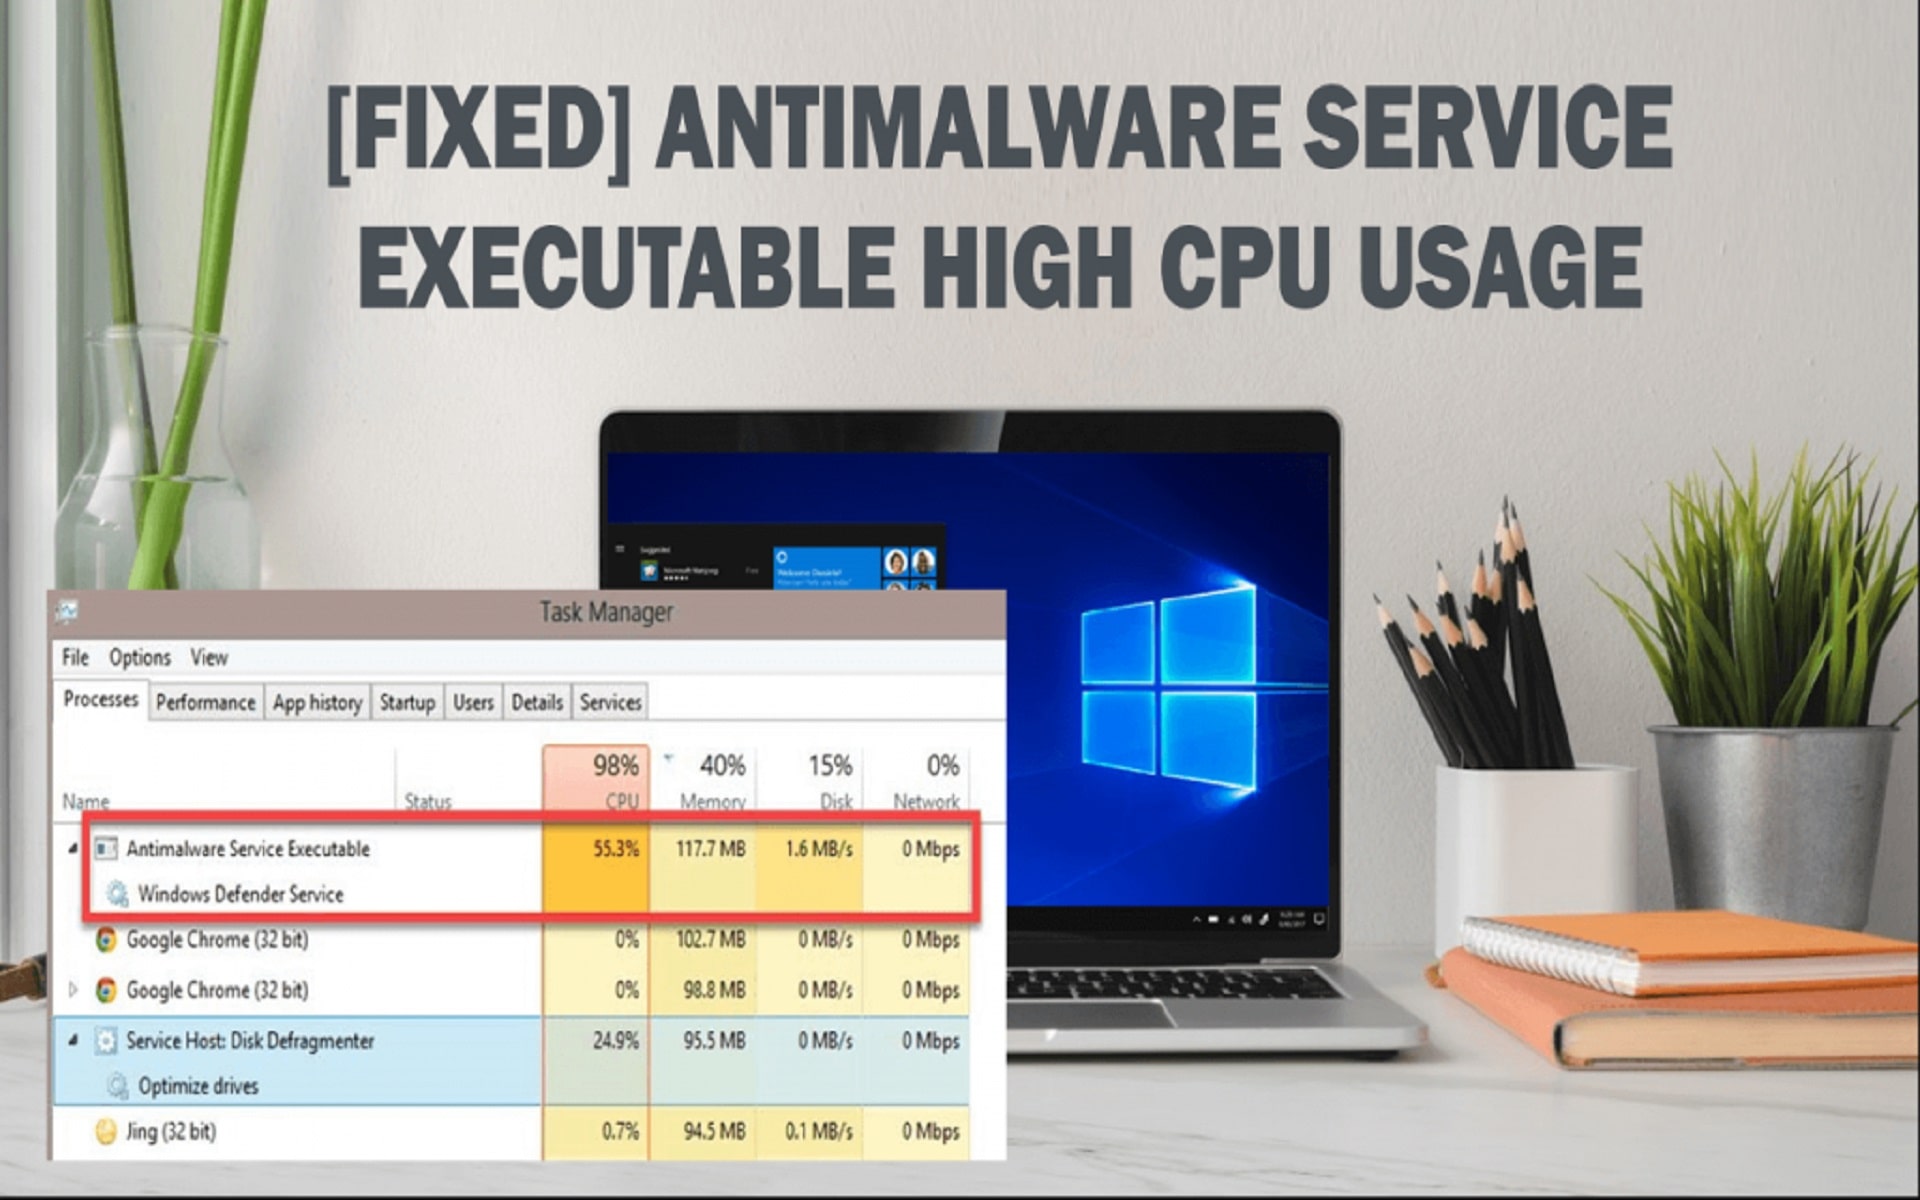 "Antimalware Service Executable" high CPU usage: Guide to repair